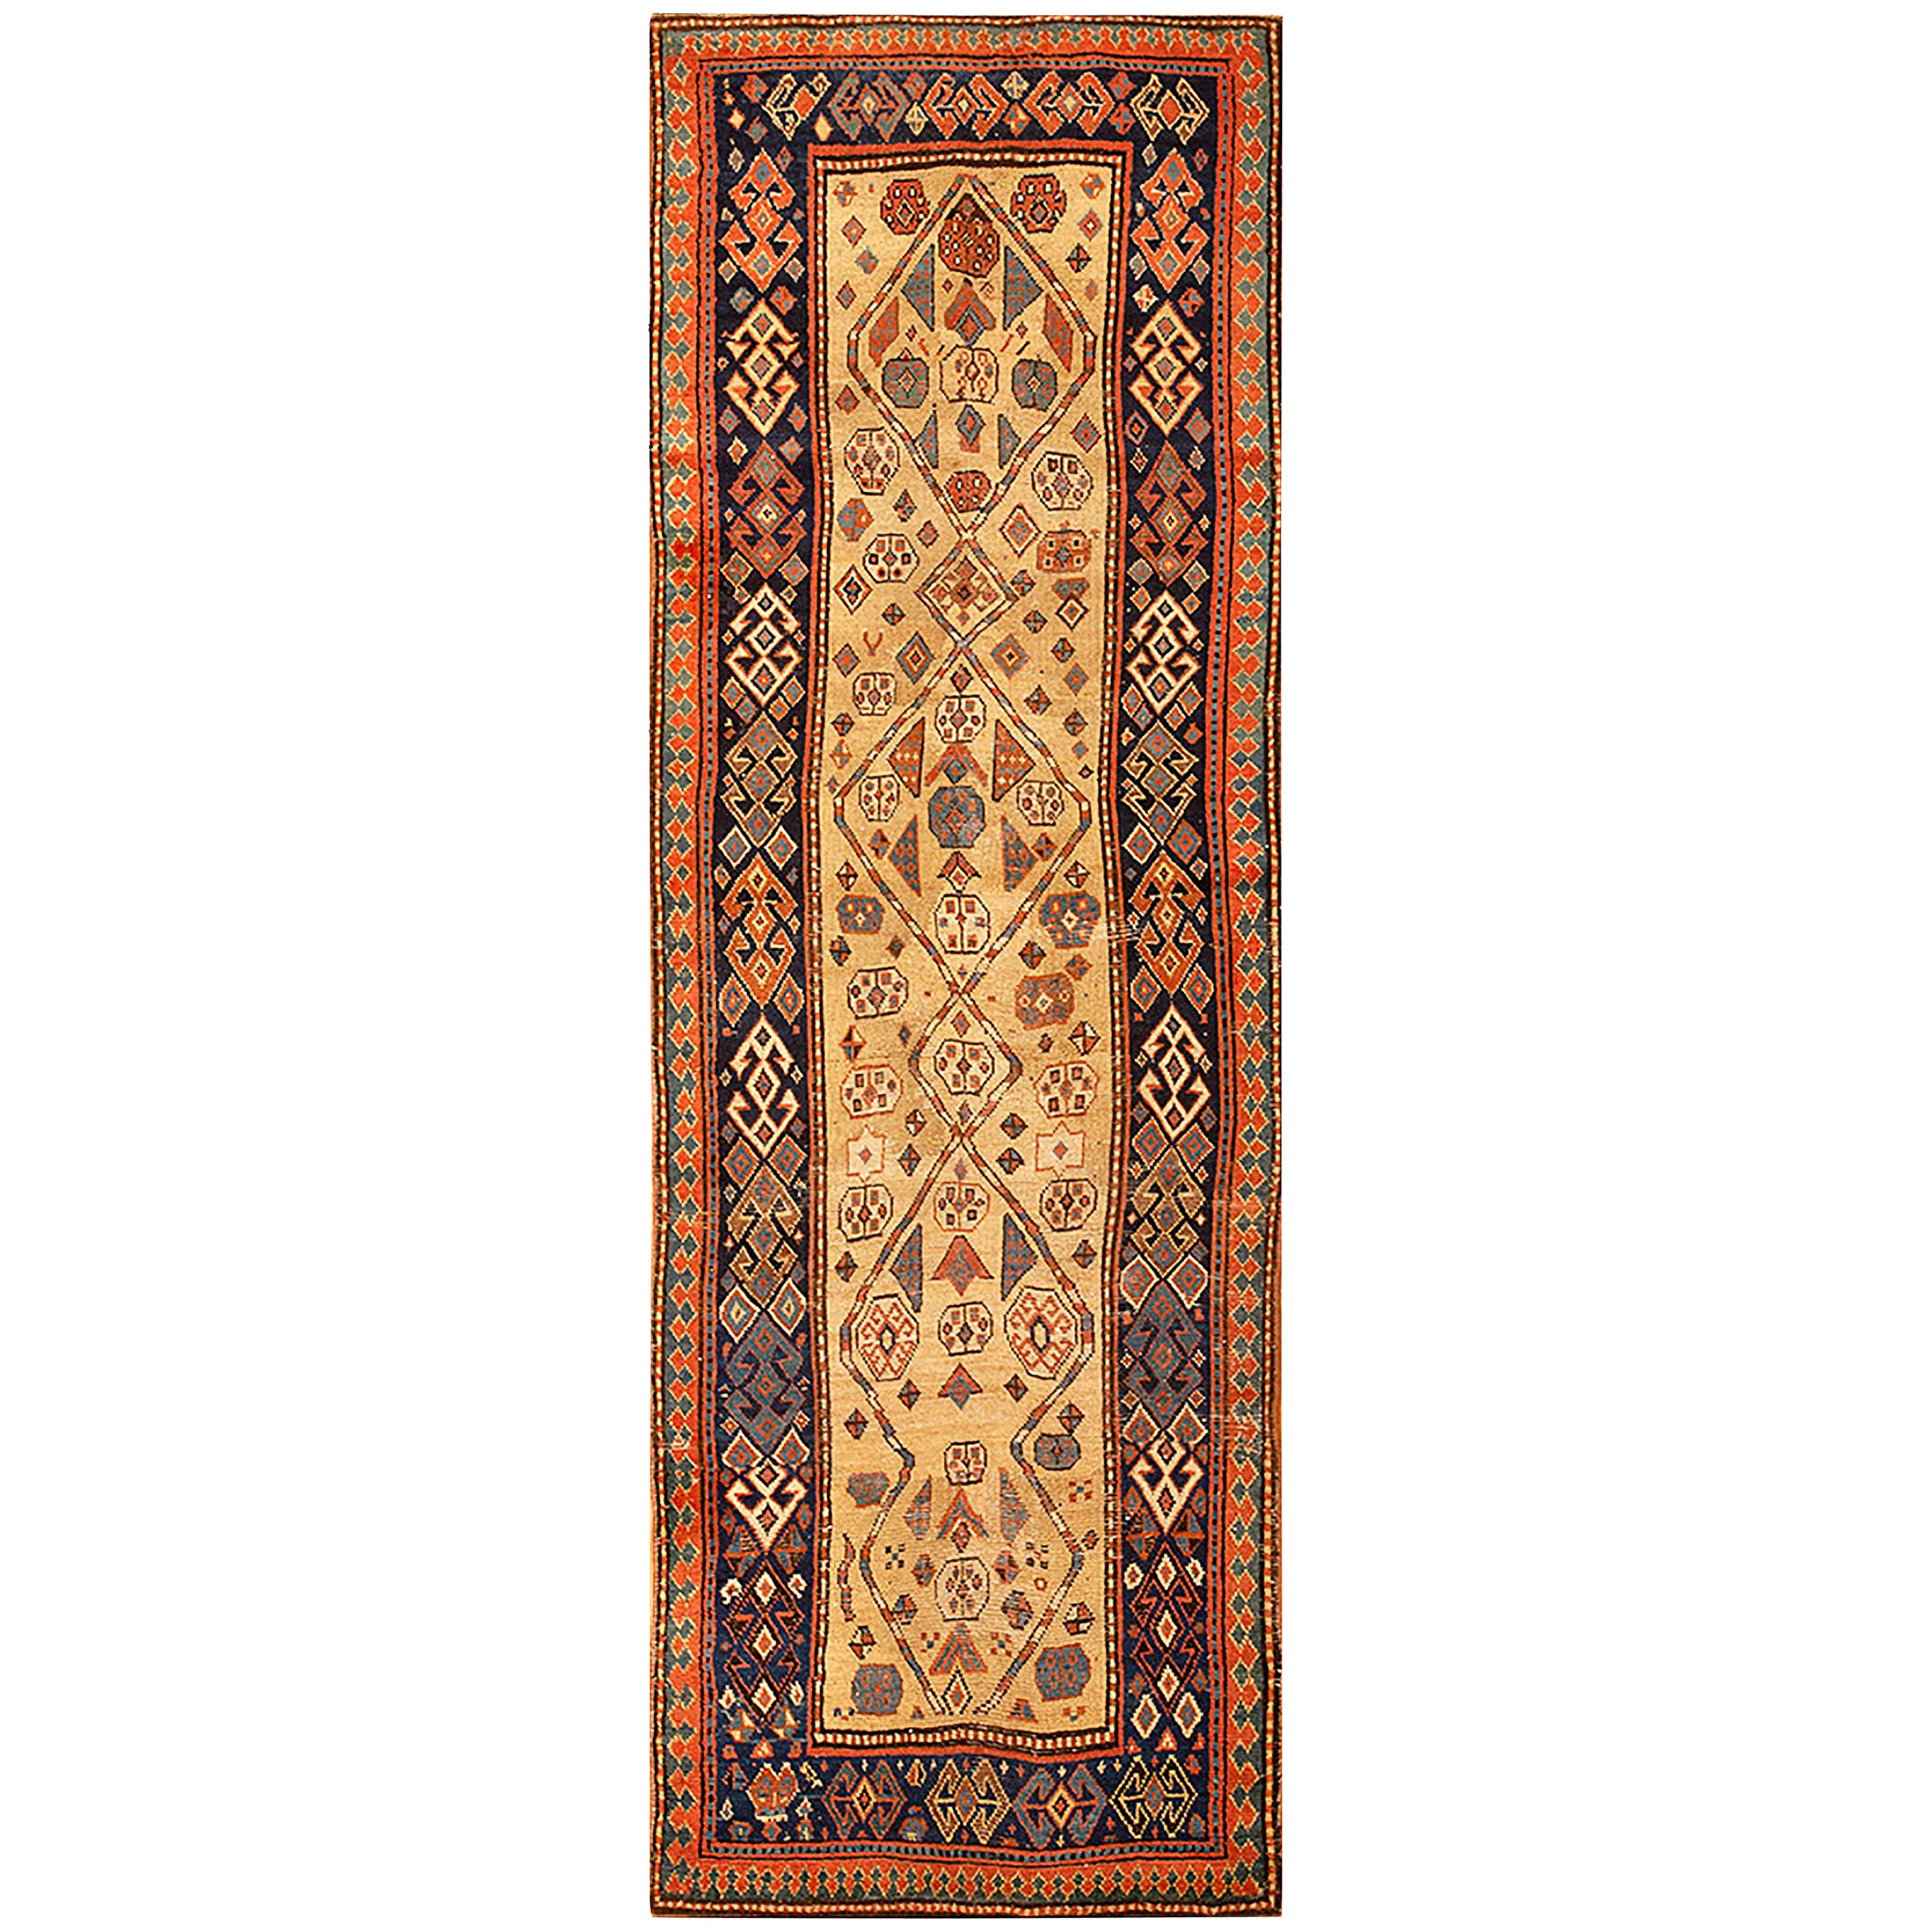 19th Century Caucasian Kazak Carpet ( 3'7" x 9'9" - 110 x 297 ) For Sale